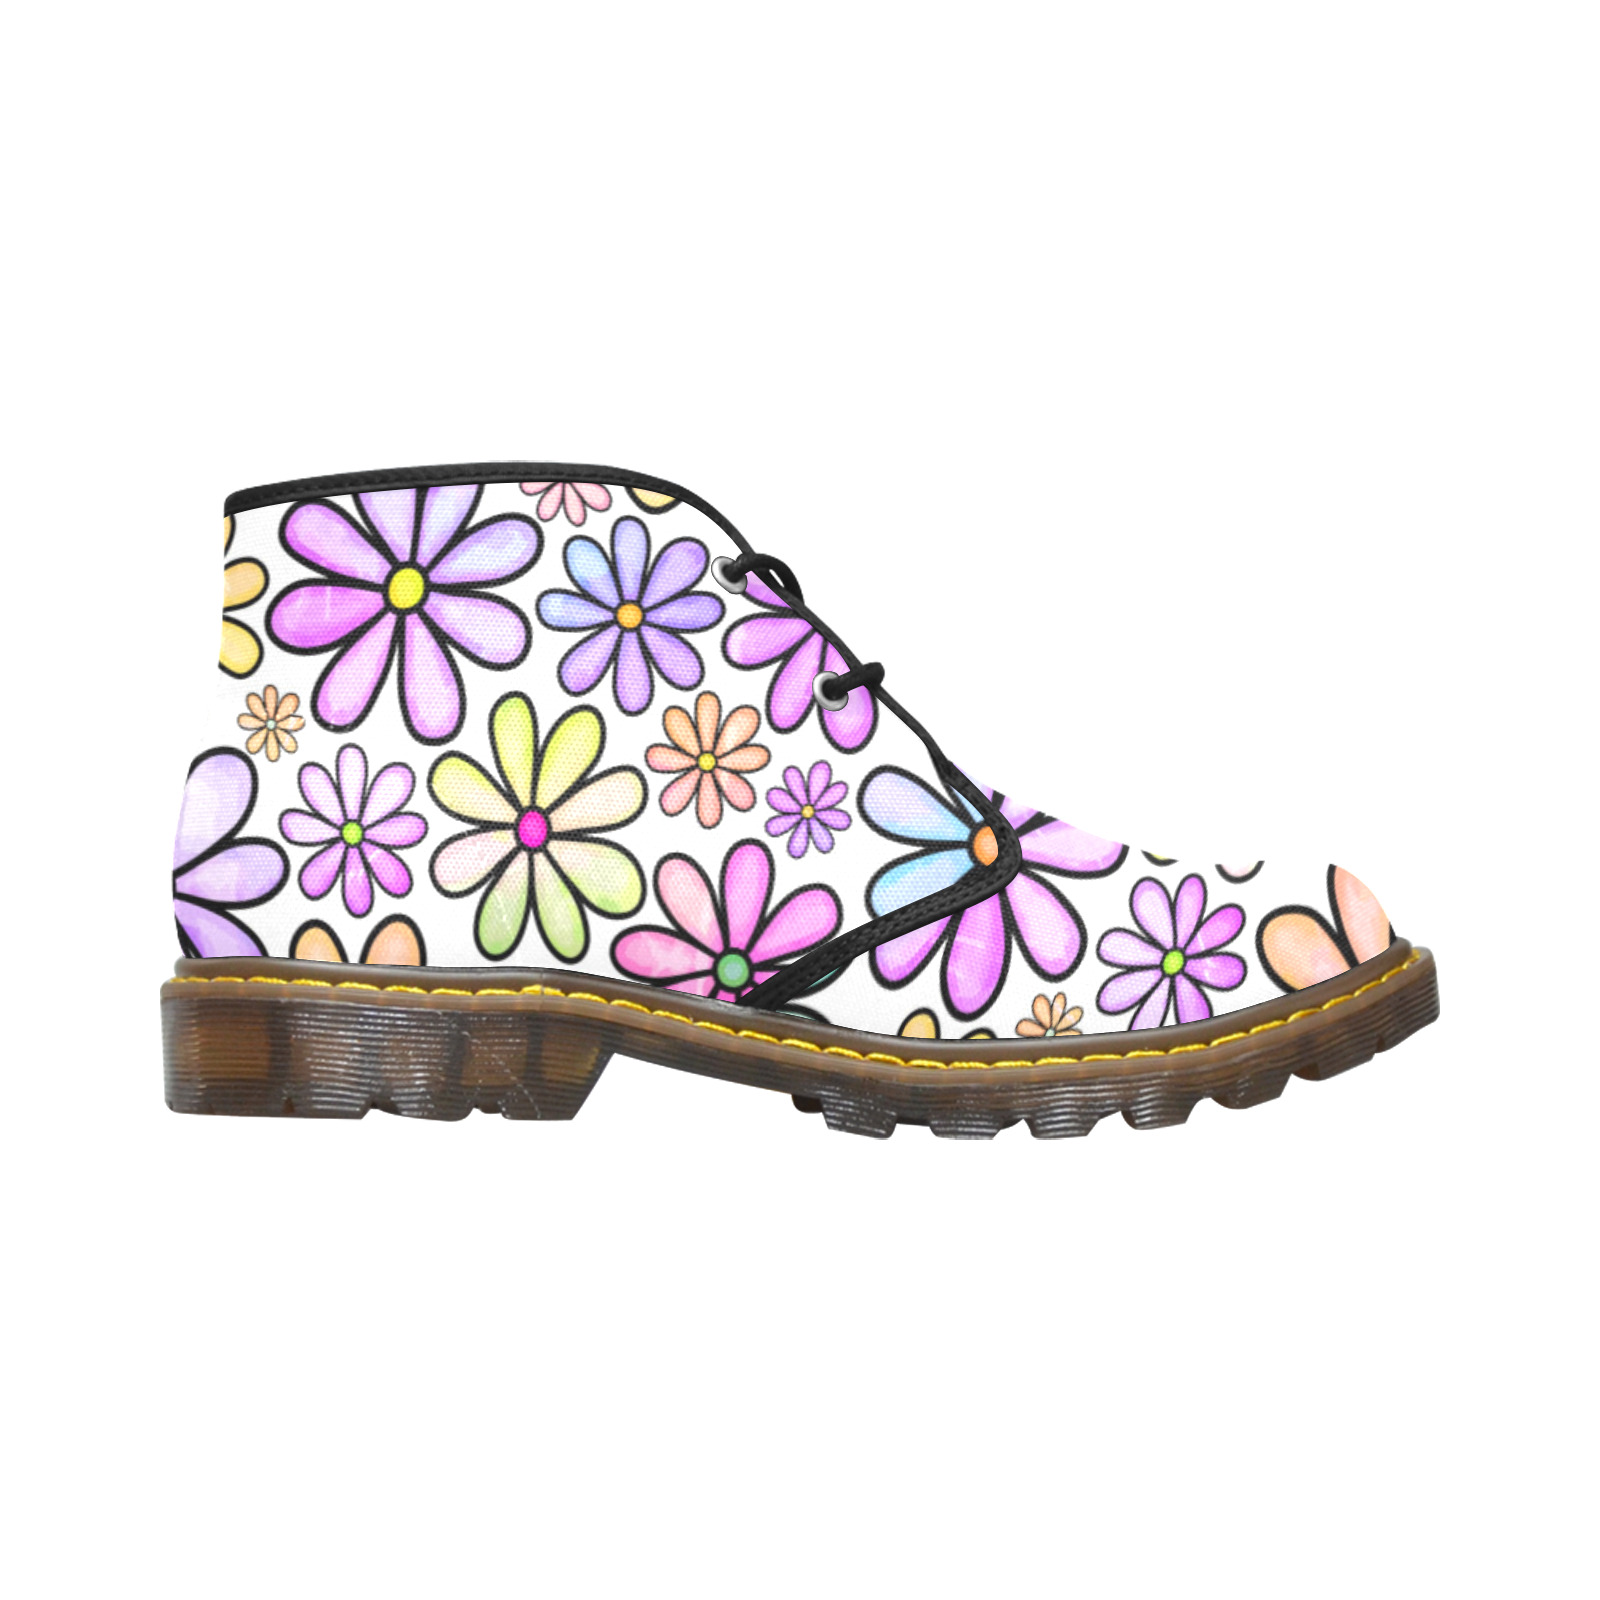 Watercolor Rainbow Doodle Daisy Flower Pattern Women's Canvas Chukka Boots (Model 2402-1)